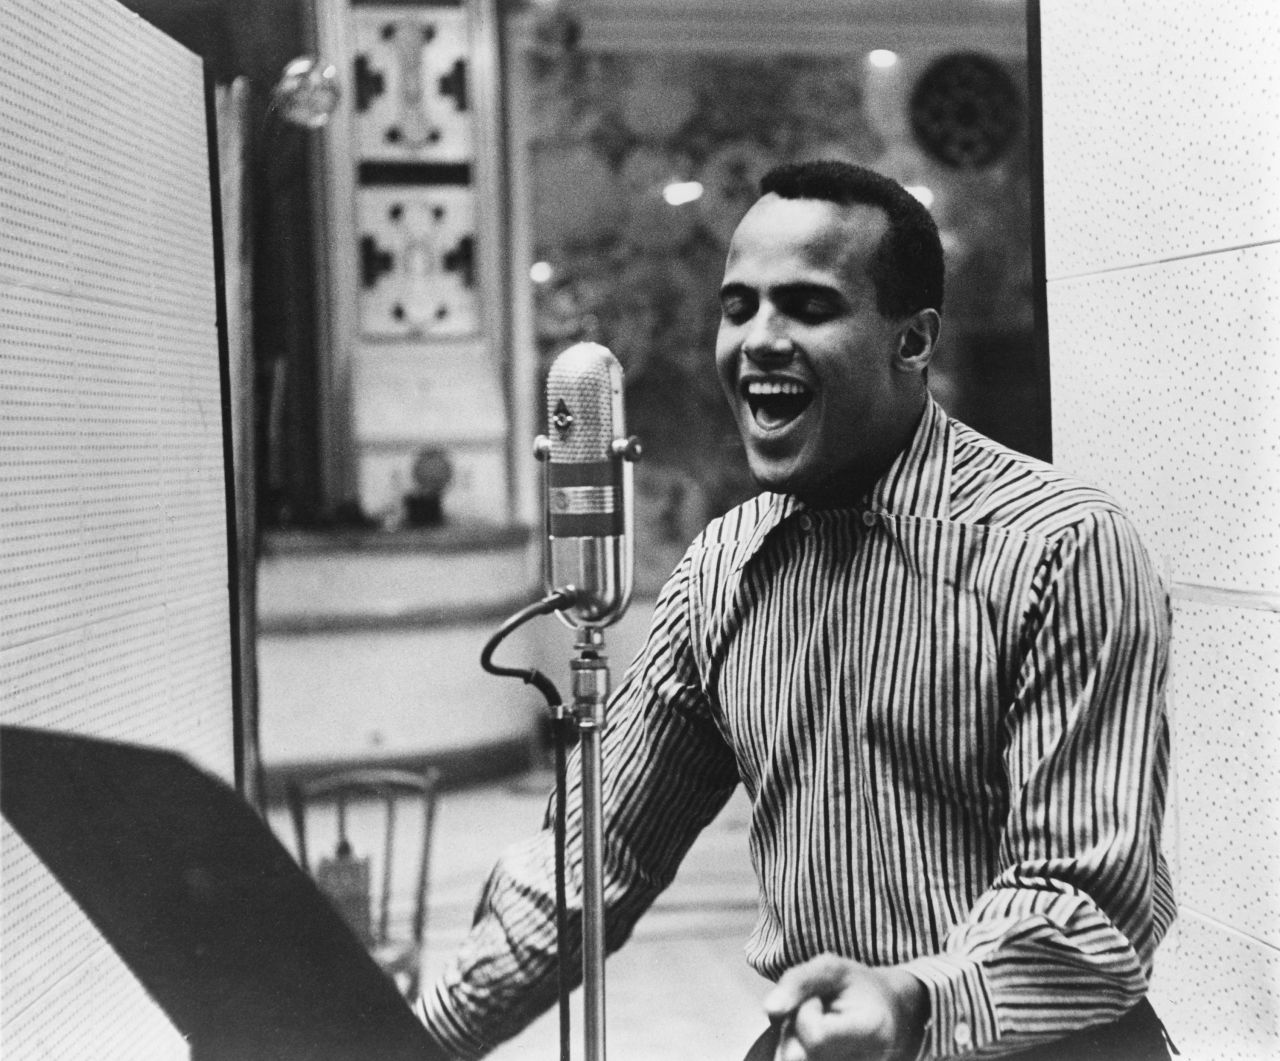 Belafonte performs in a recording studio circa 1957.